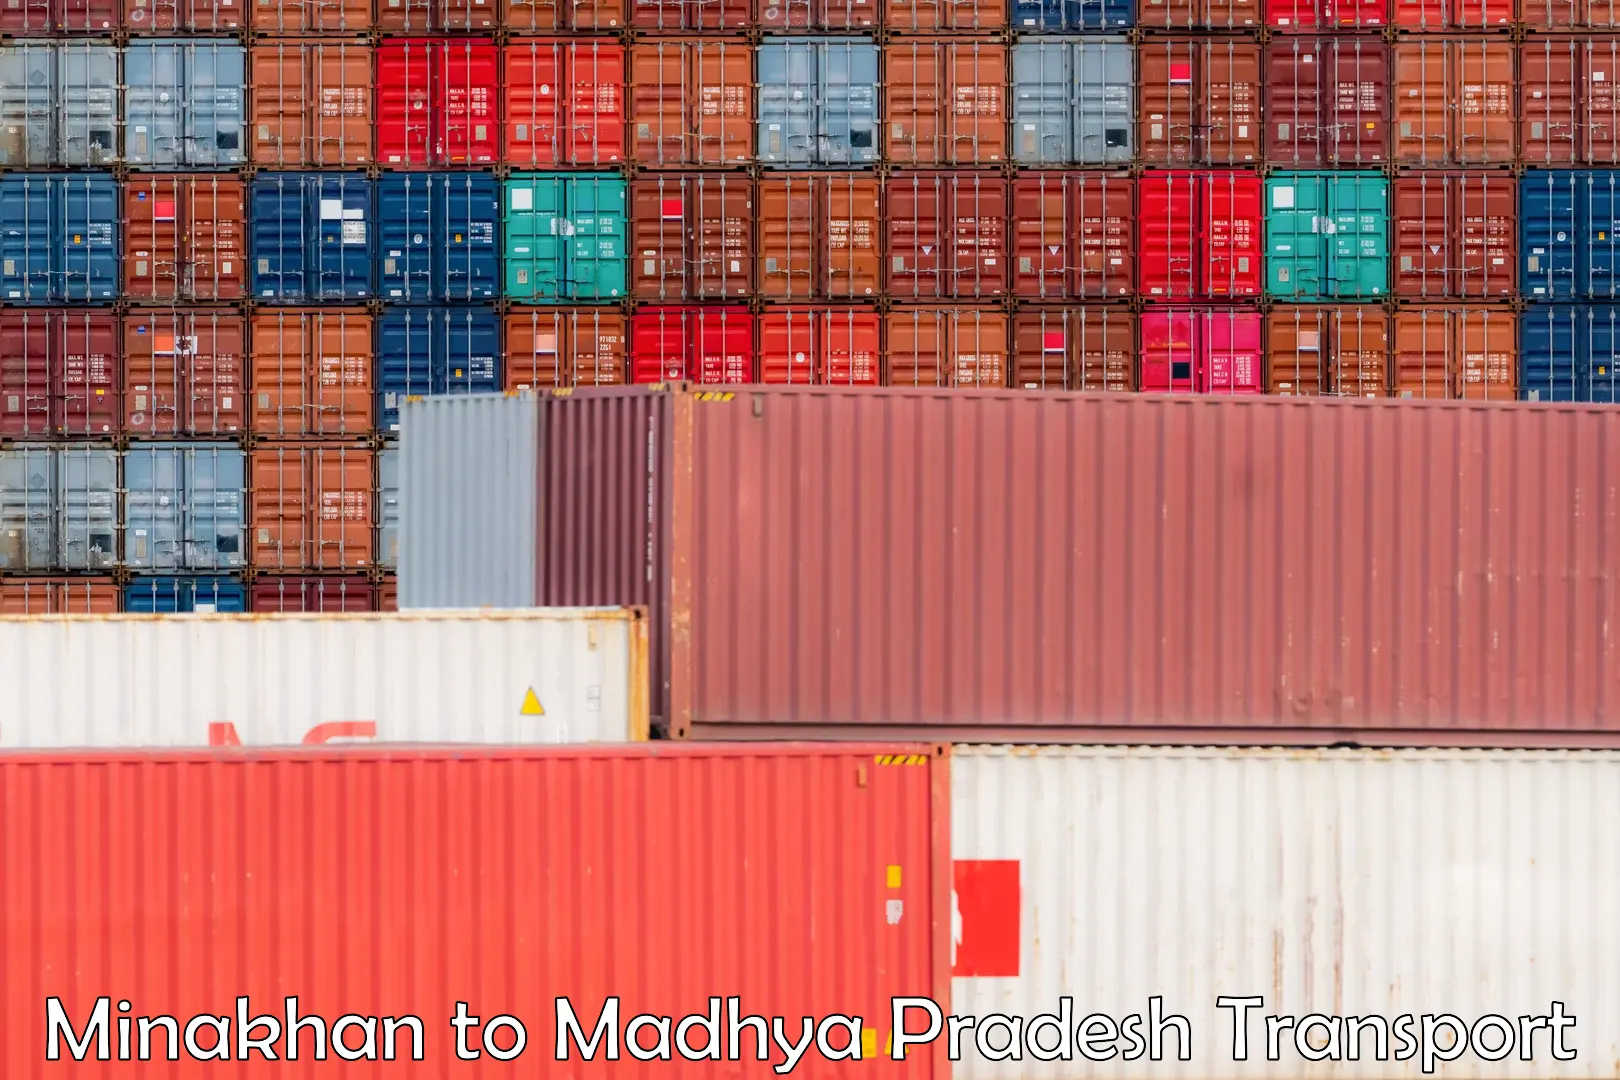 Truck transport companies in India Minakhan to Sendhwa